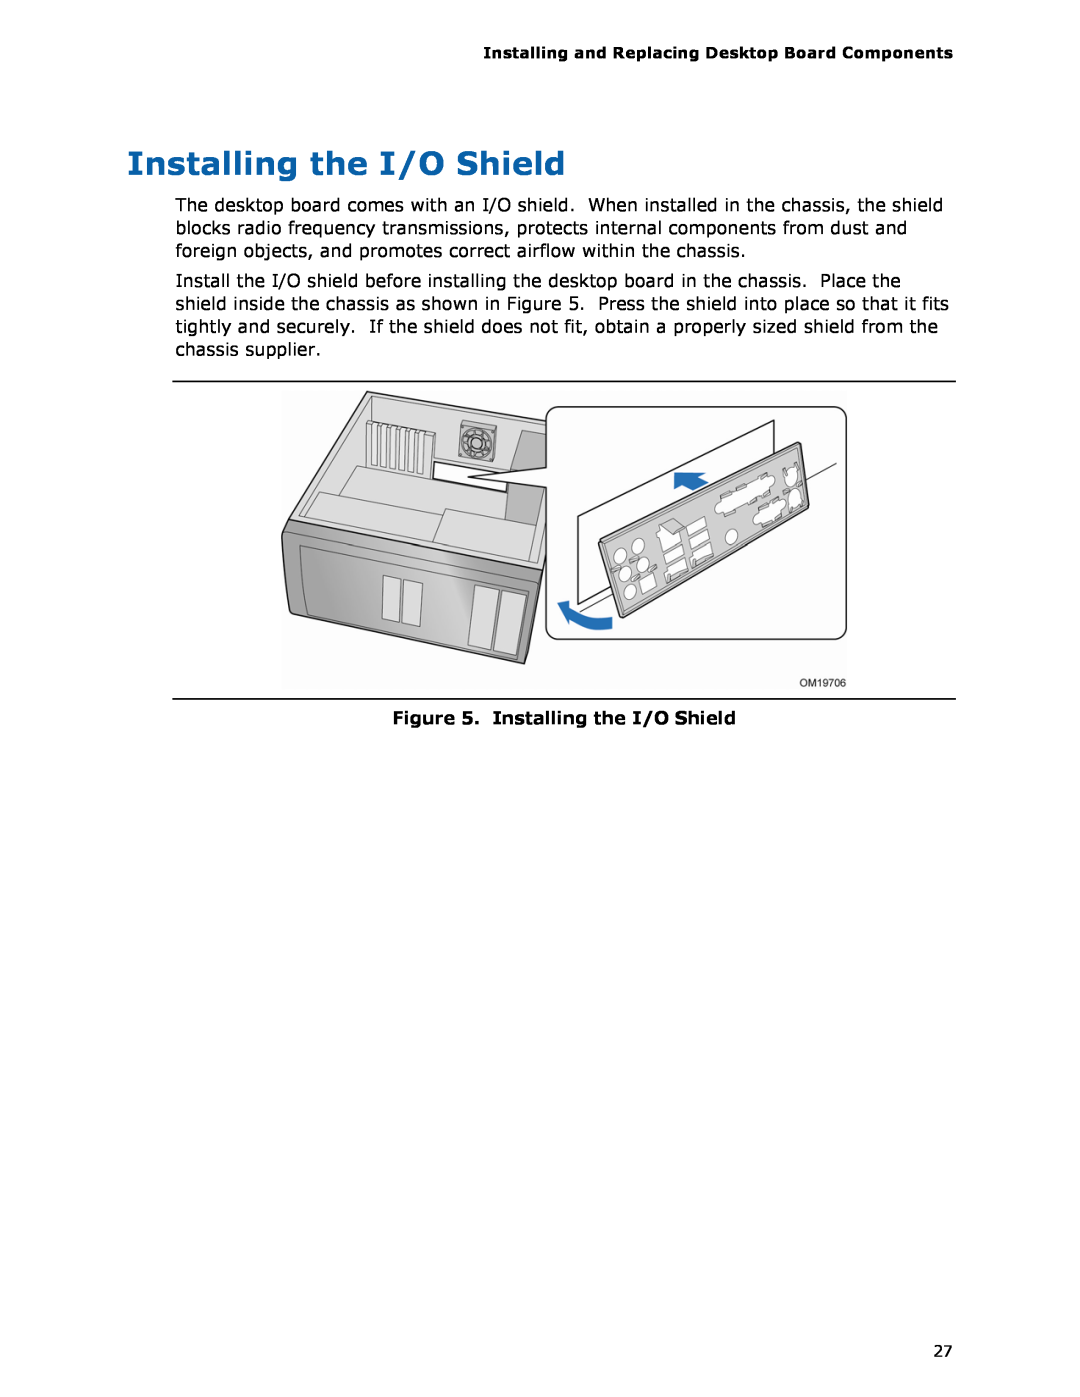 Intel D975XBX2 manual Installing the I/O Shield 